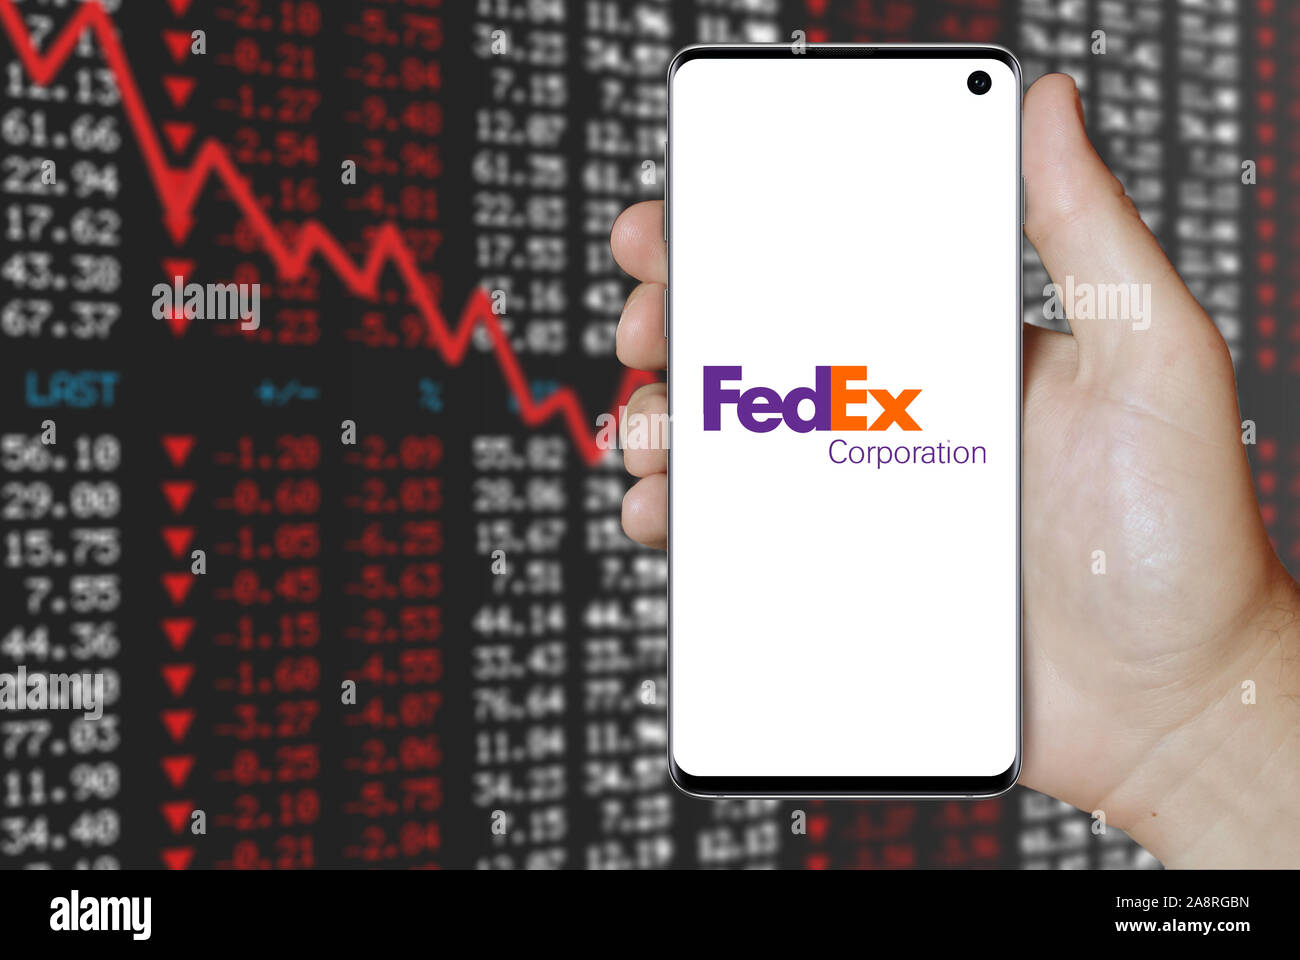 Logo of public company FedEx Corporation displayed on a smartphone. Negative stock market background. Credit: PIXDUCE Stock Photo